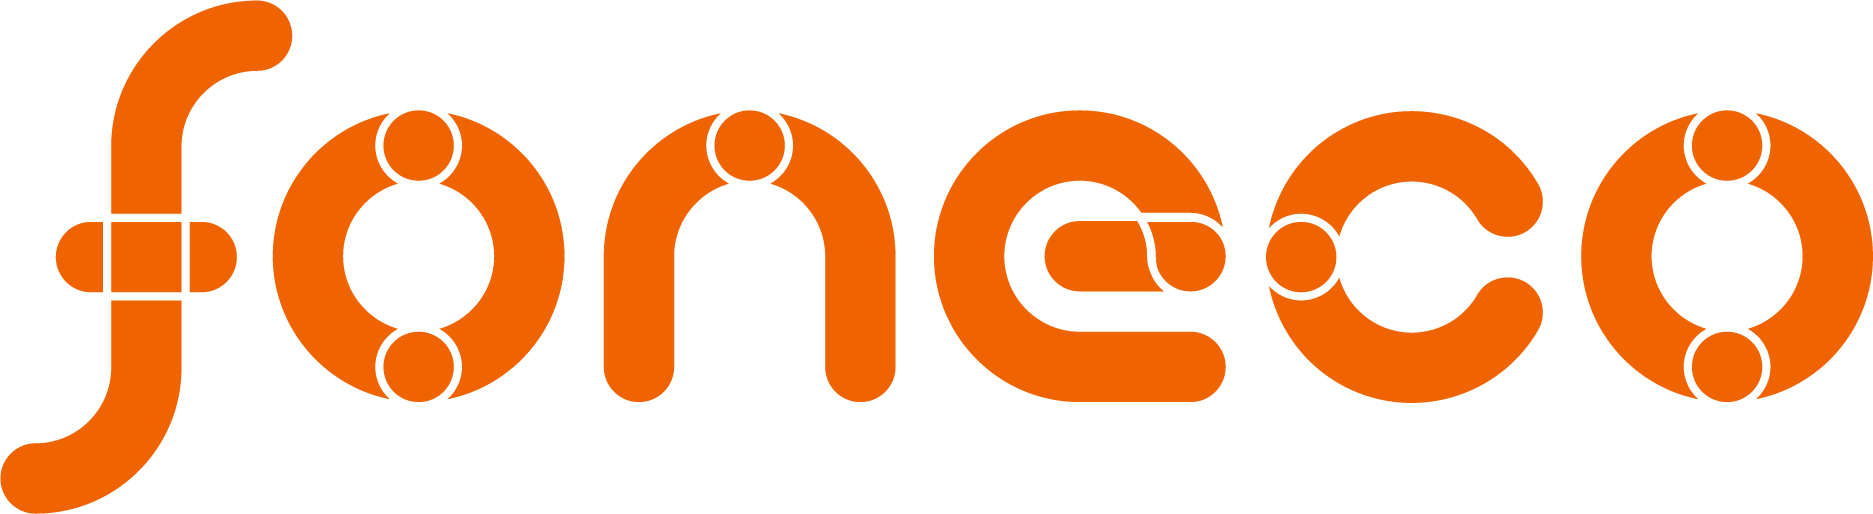 Foneco Logo